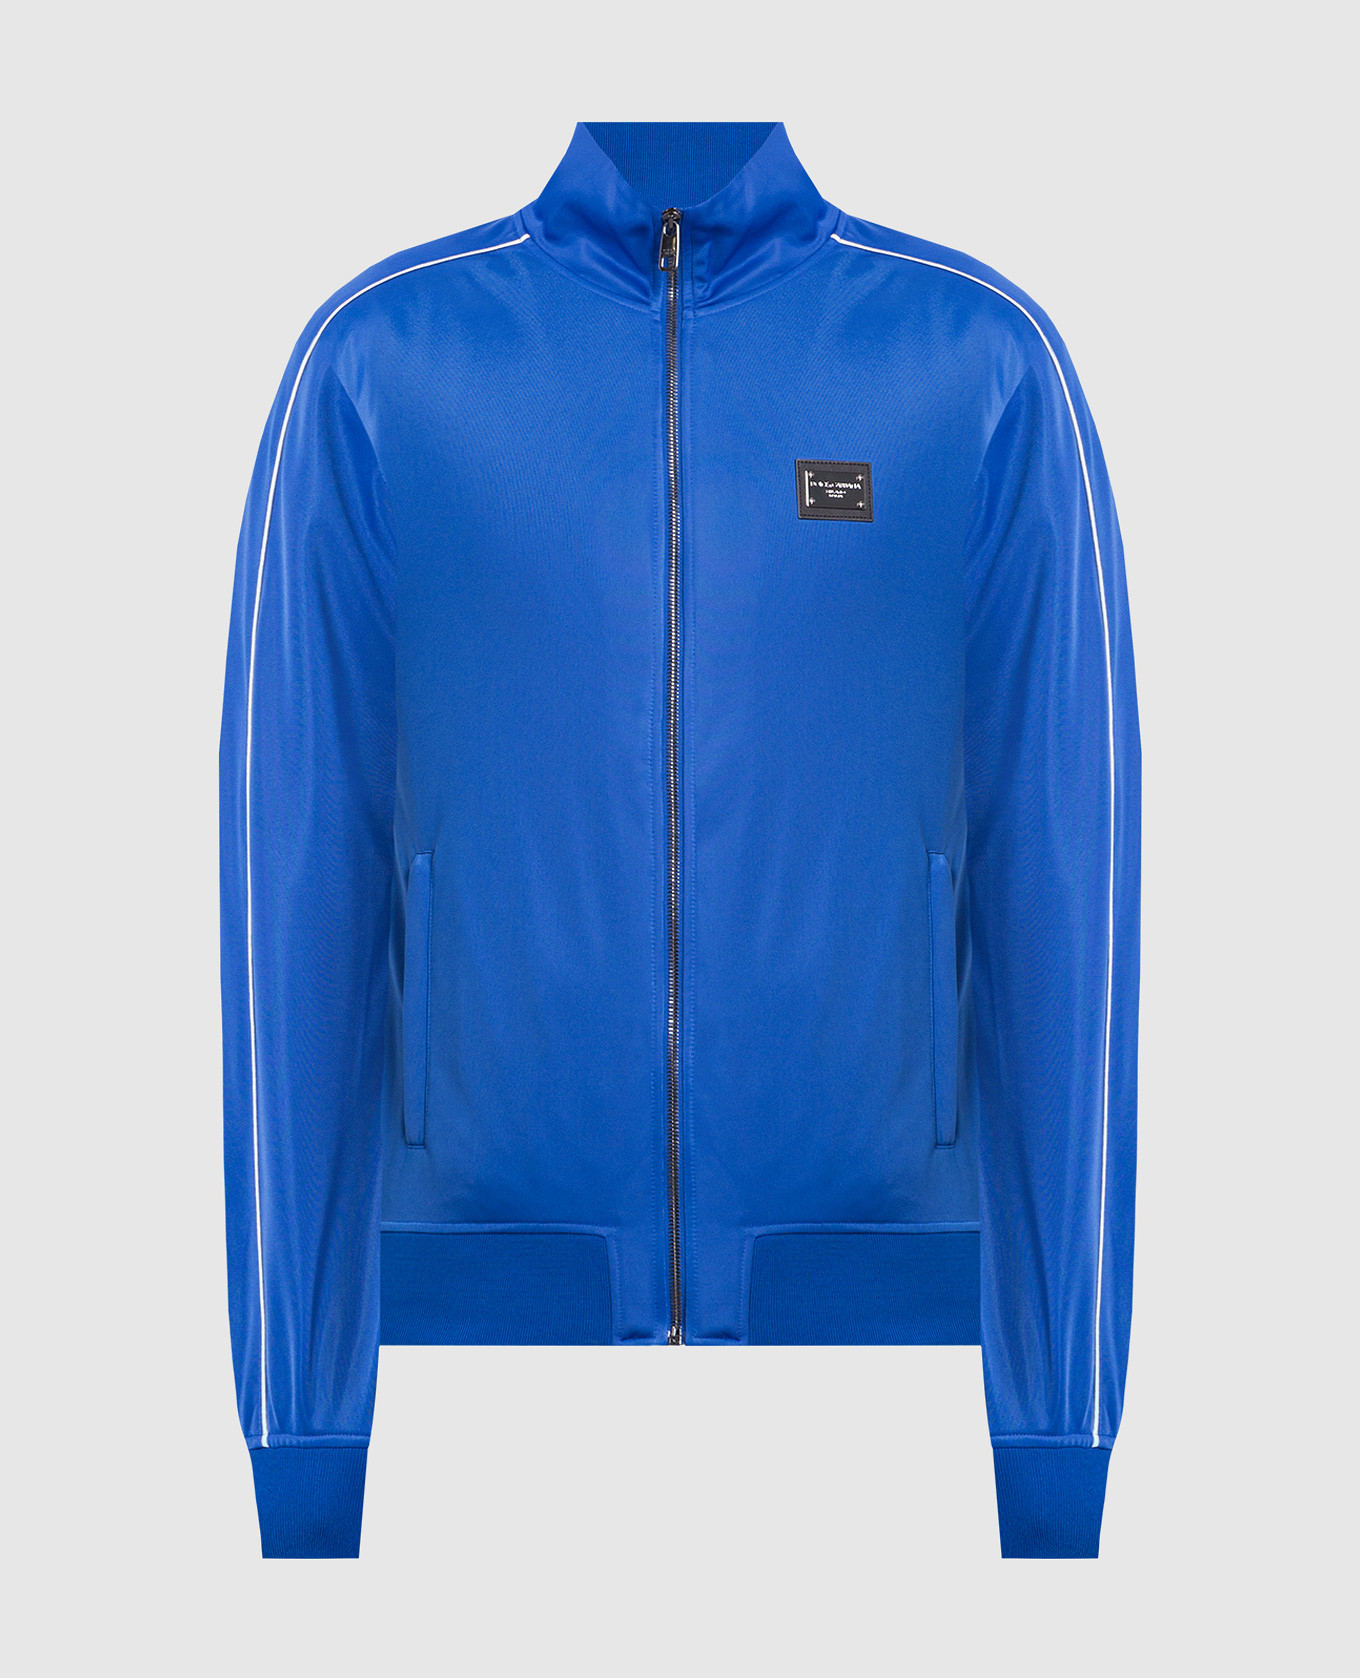 Blue sports jacket with a logo